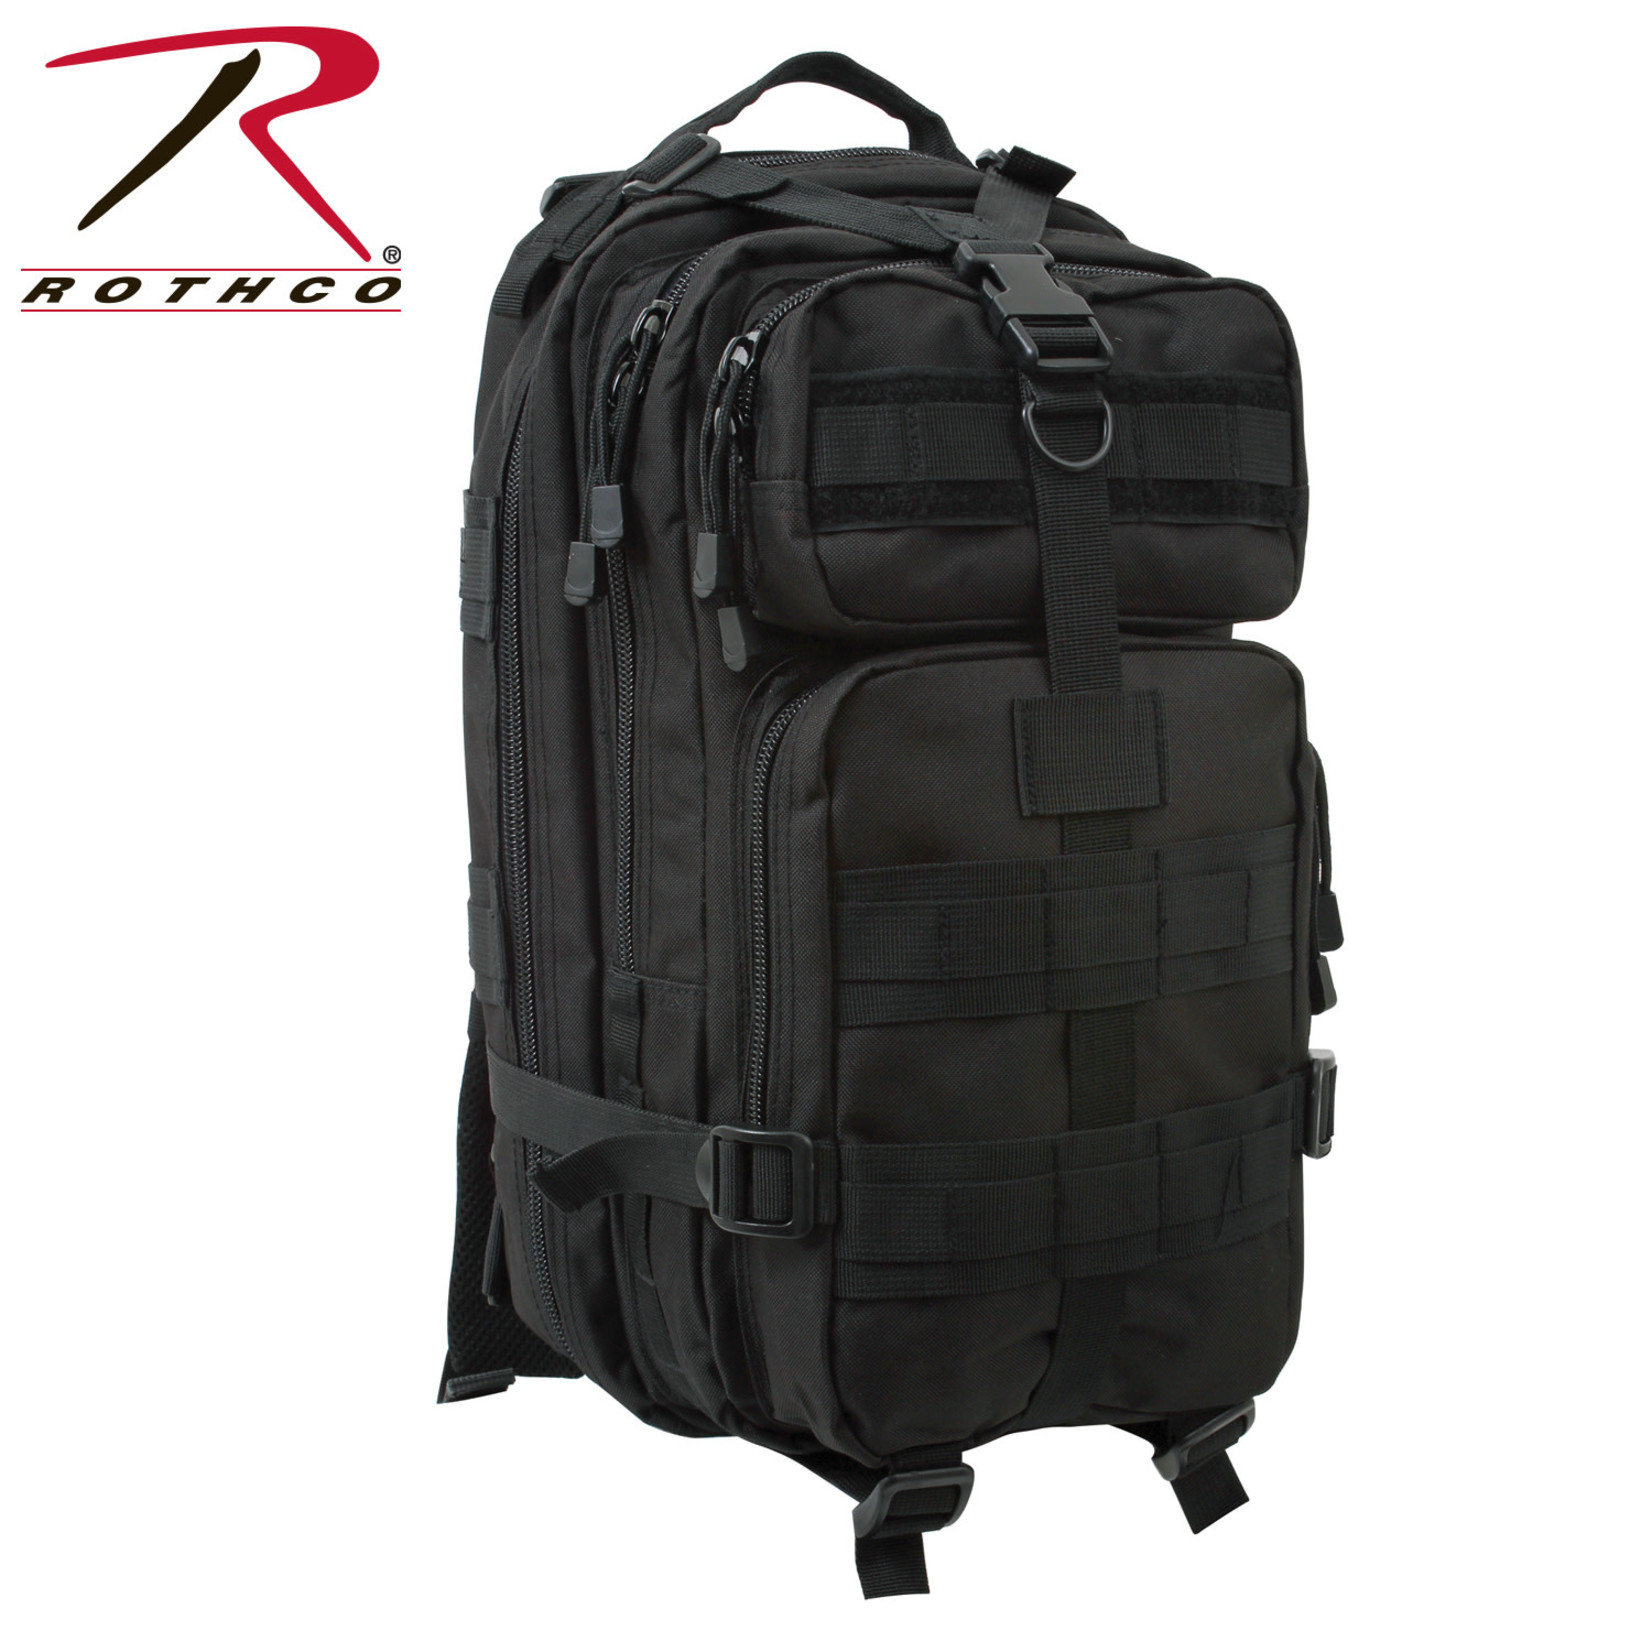 Rothco Rothco Medium Transport Backpack